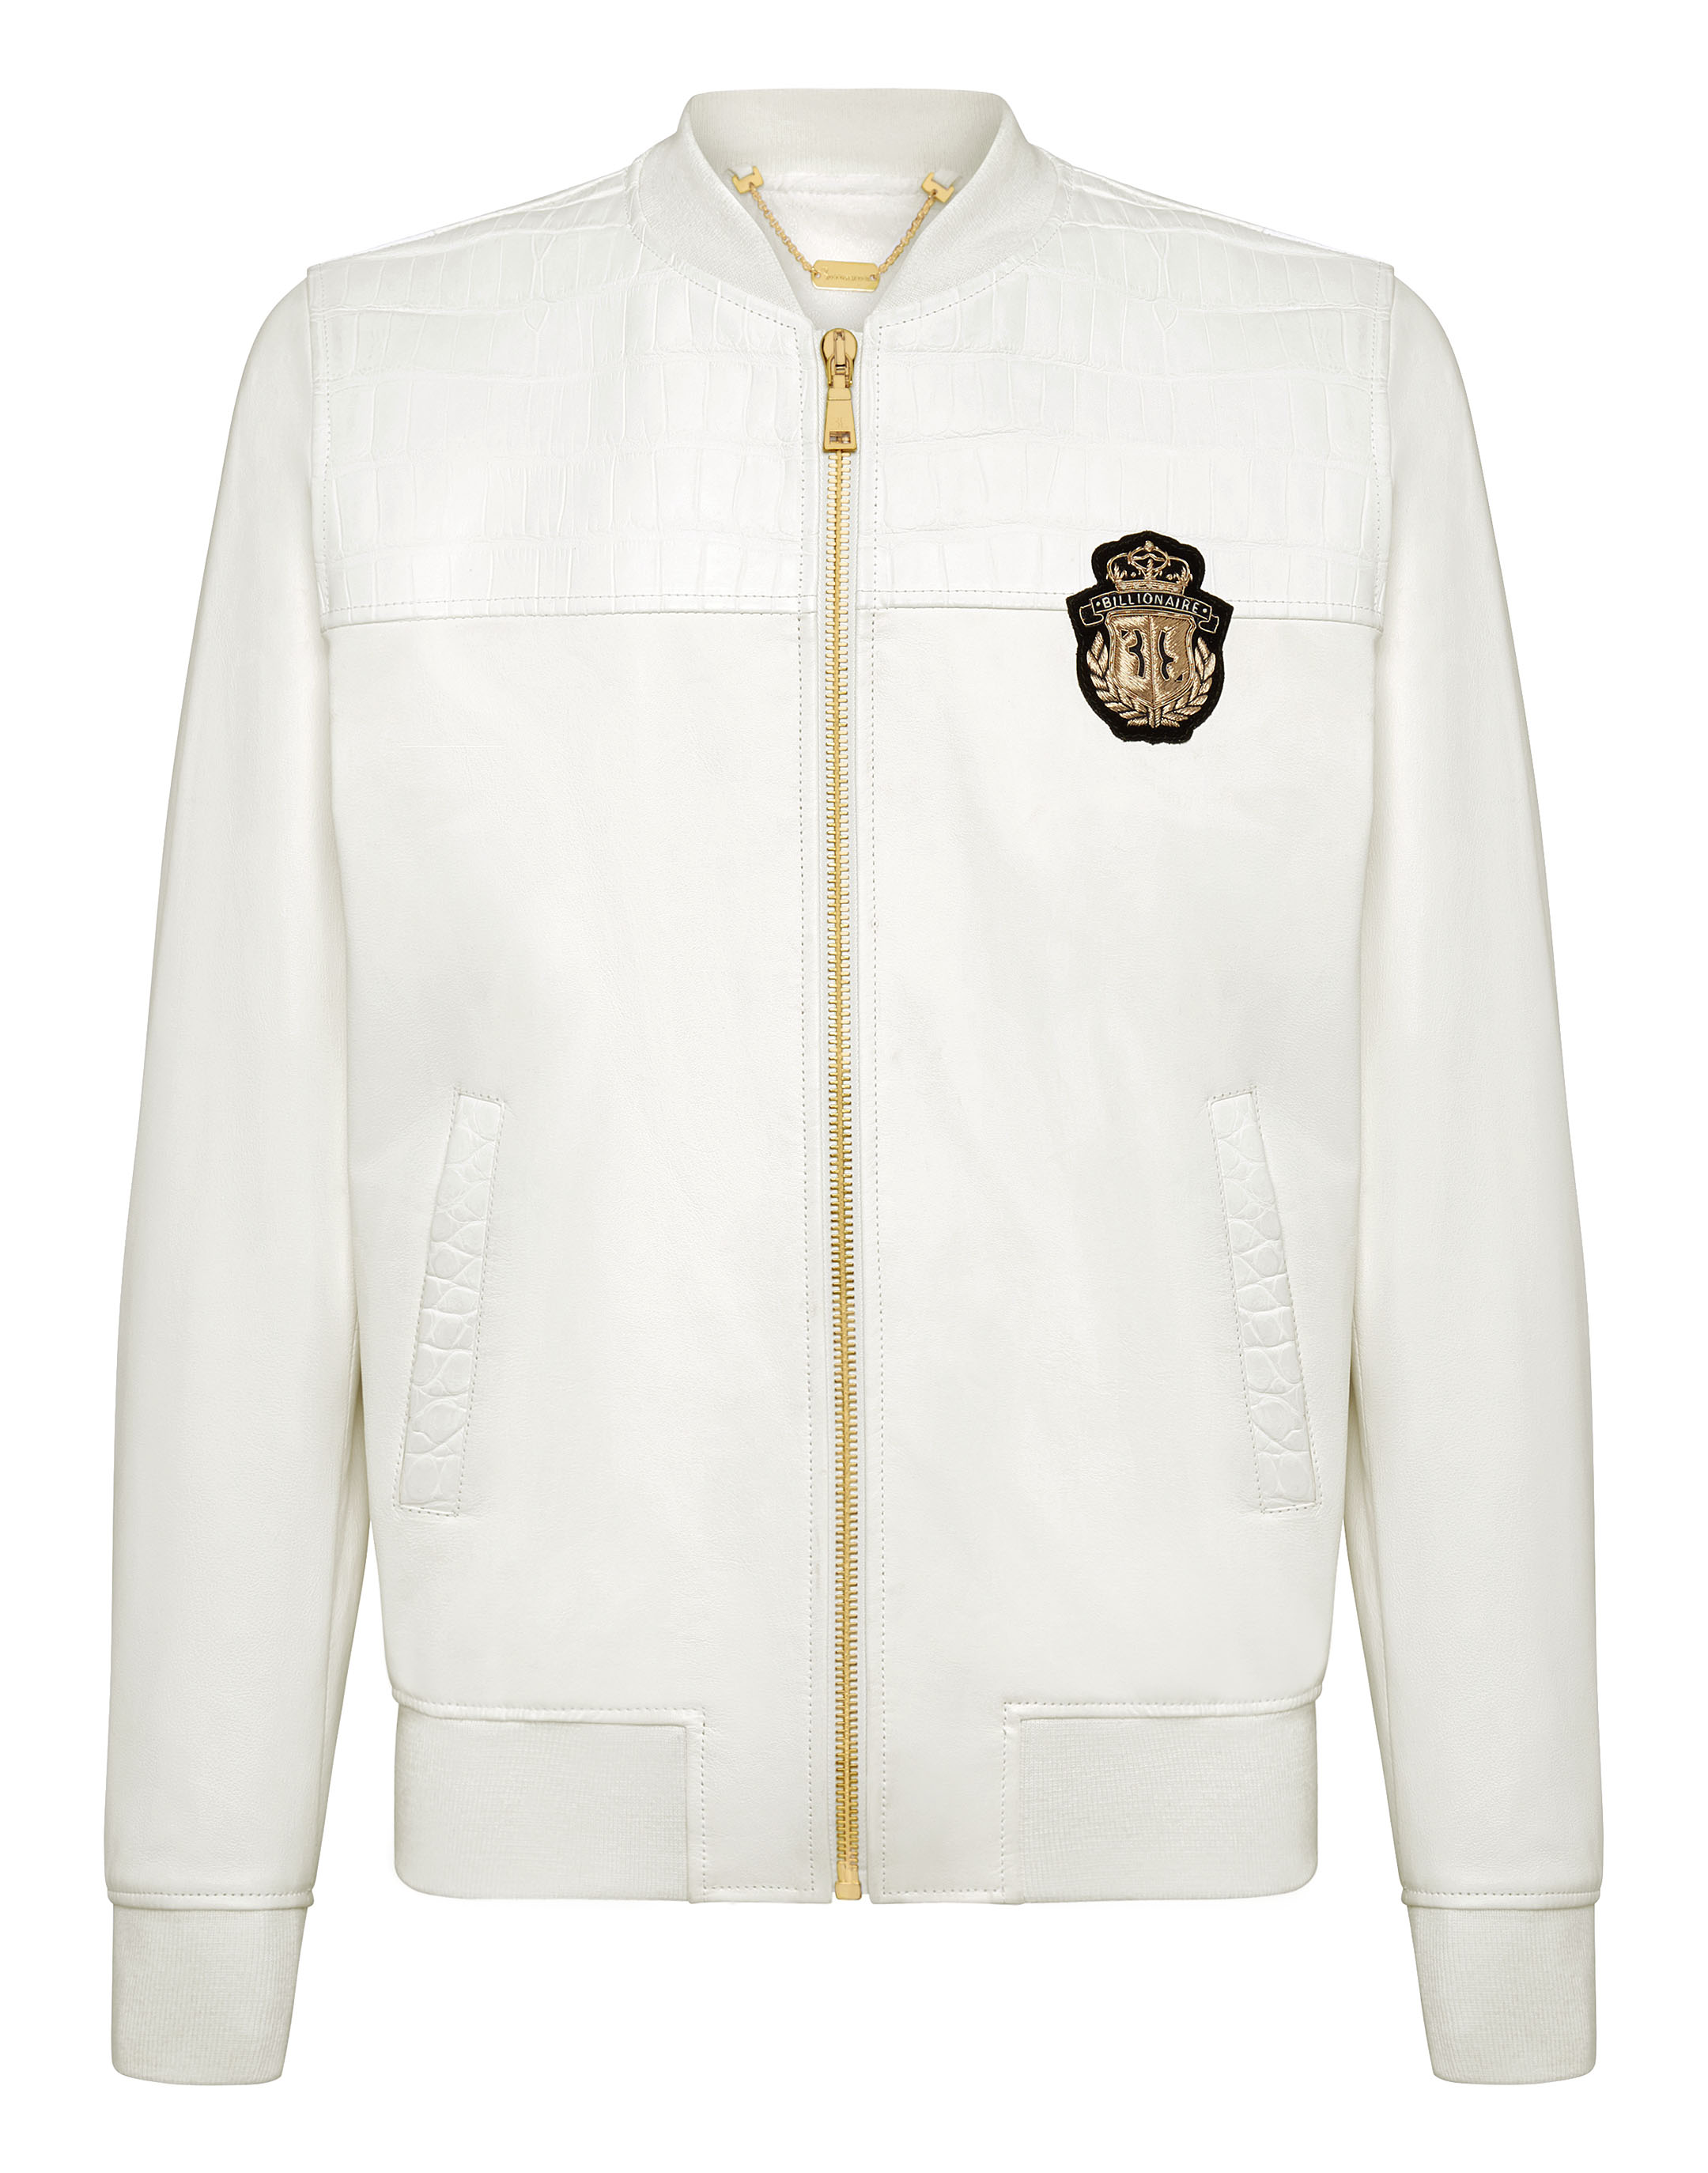 Unisex Faux Leather Bomber/Tour Jacket - Embroidered White Buzzer